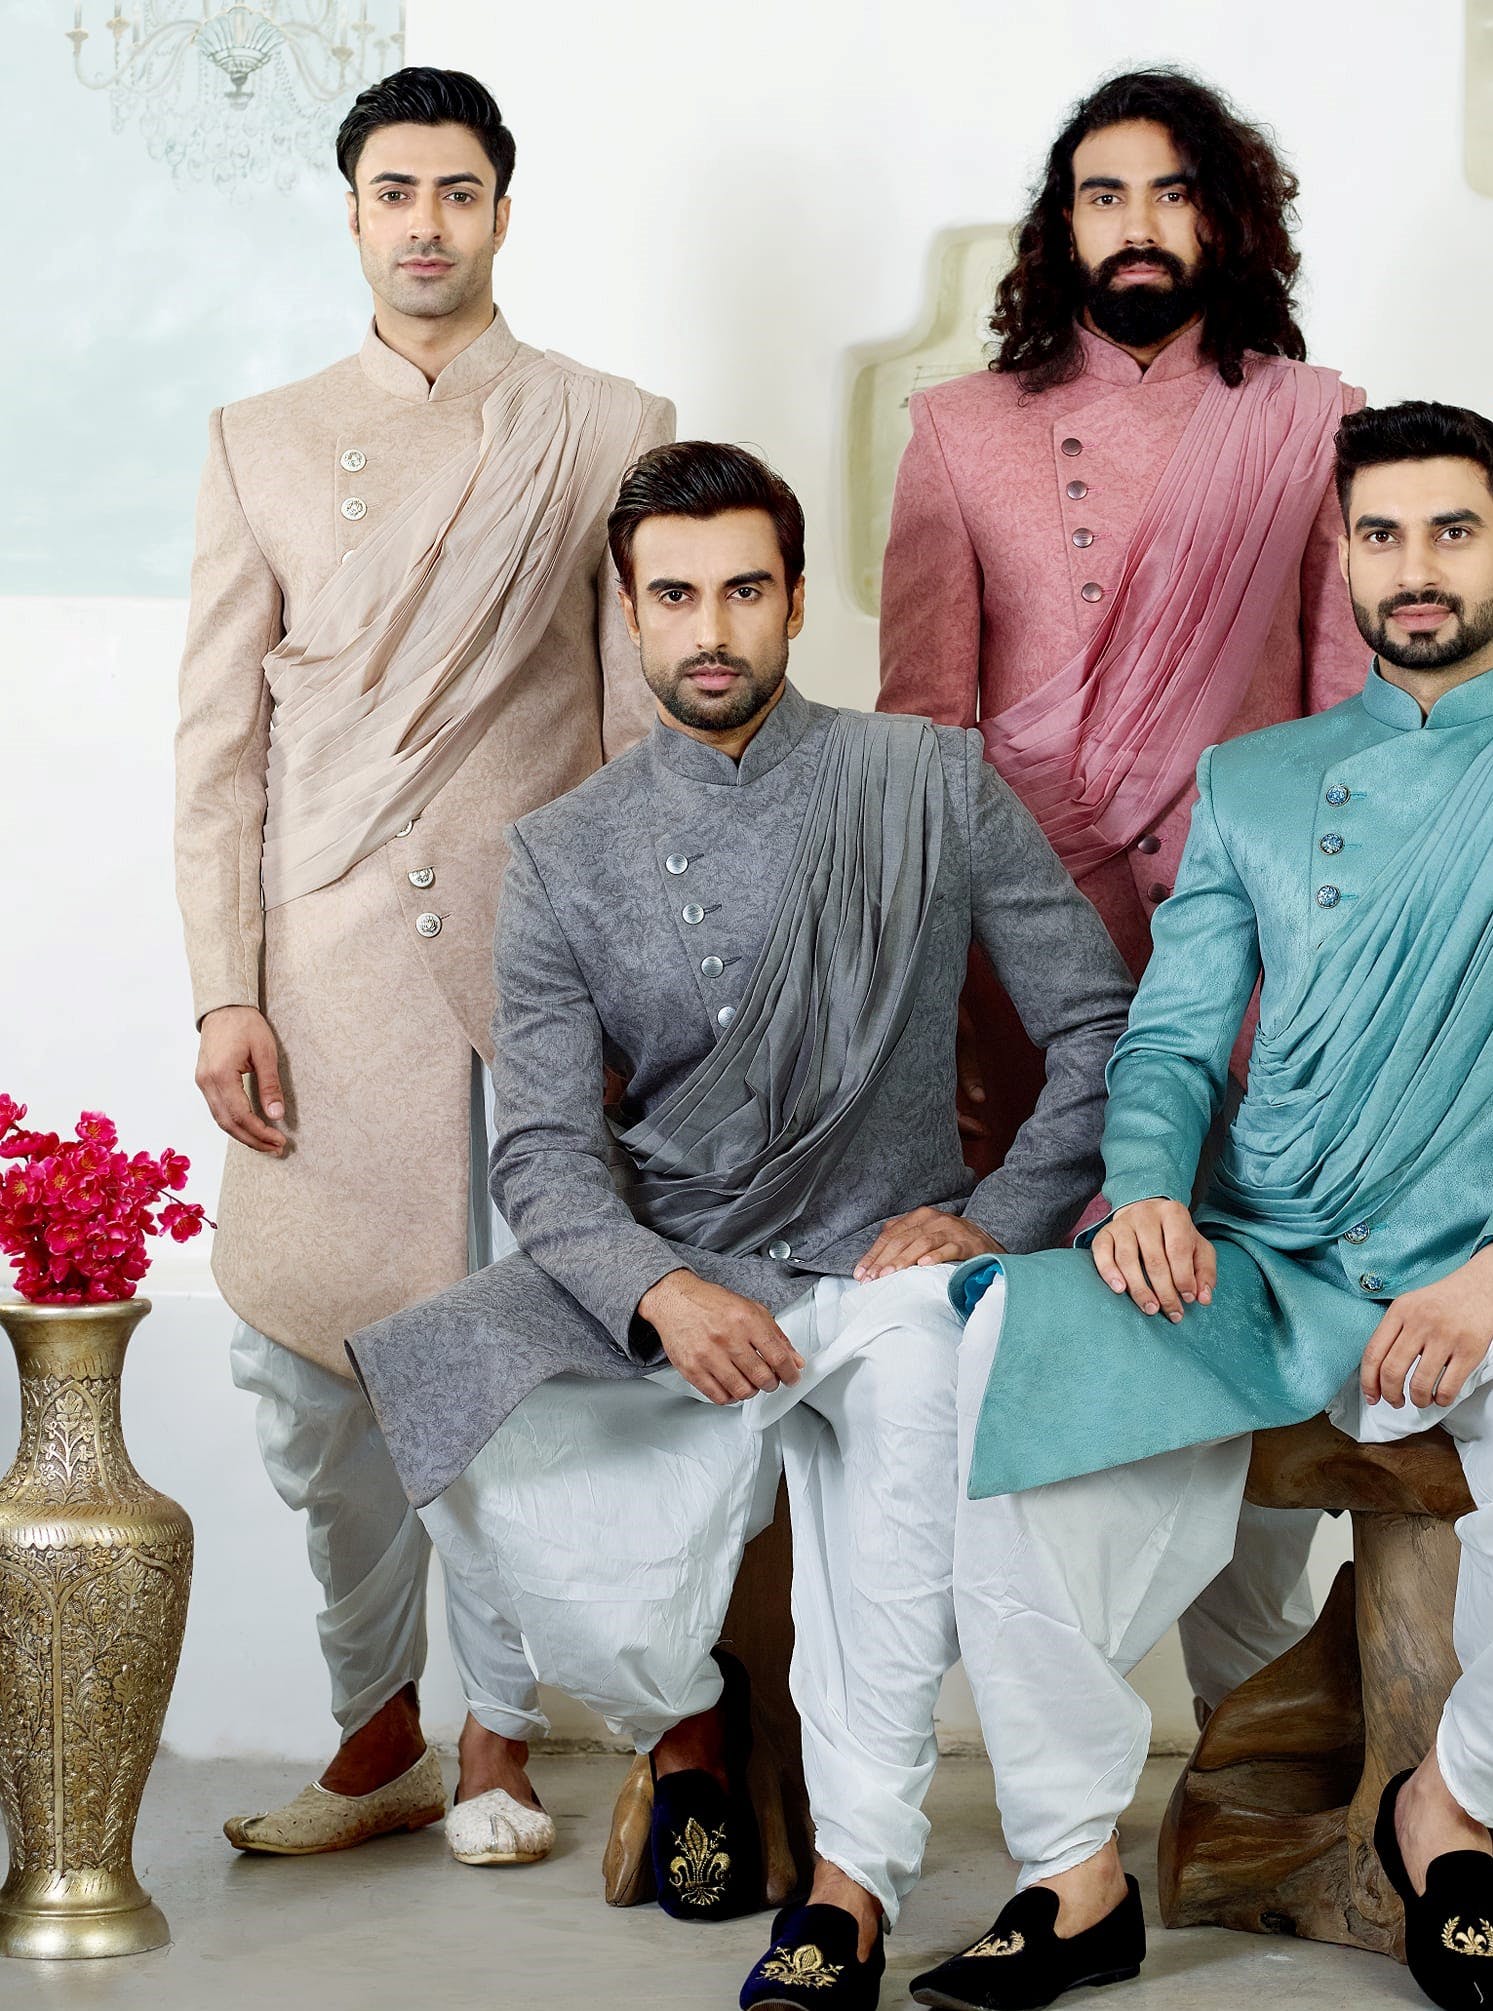 PakCouture | Beard styles for men, Muslim beard, Beard styles short